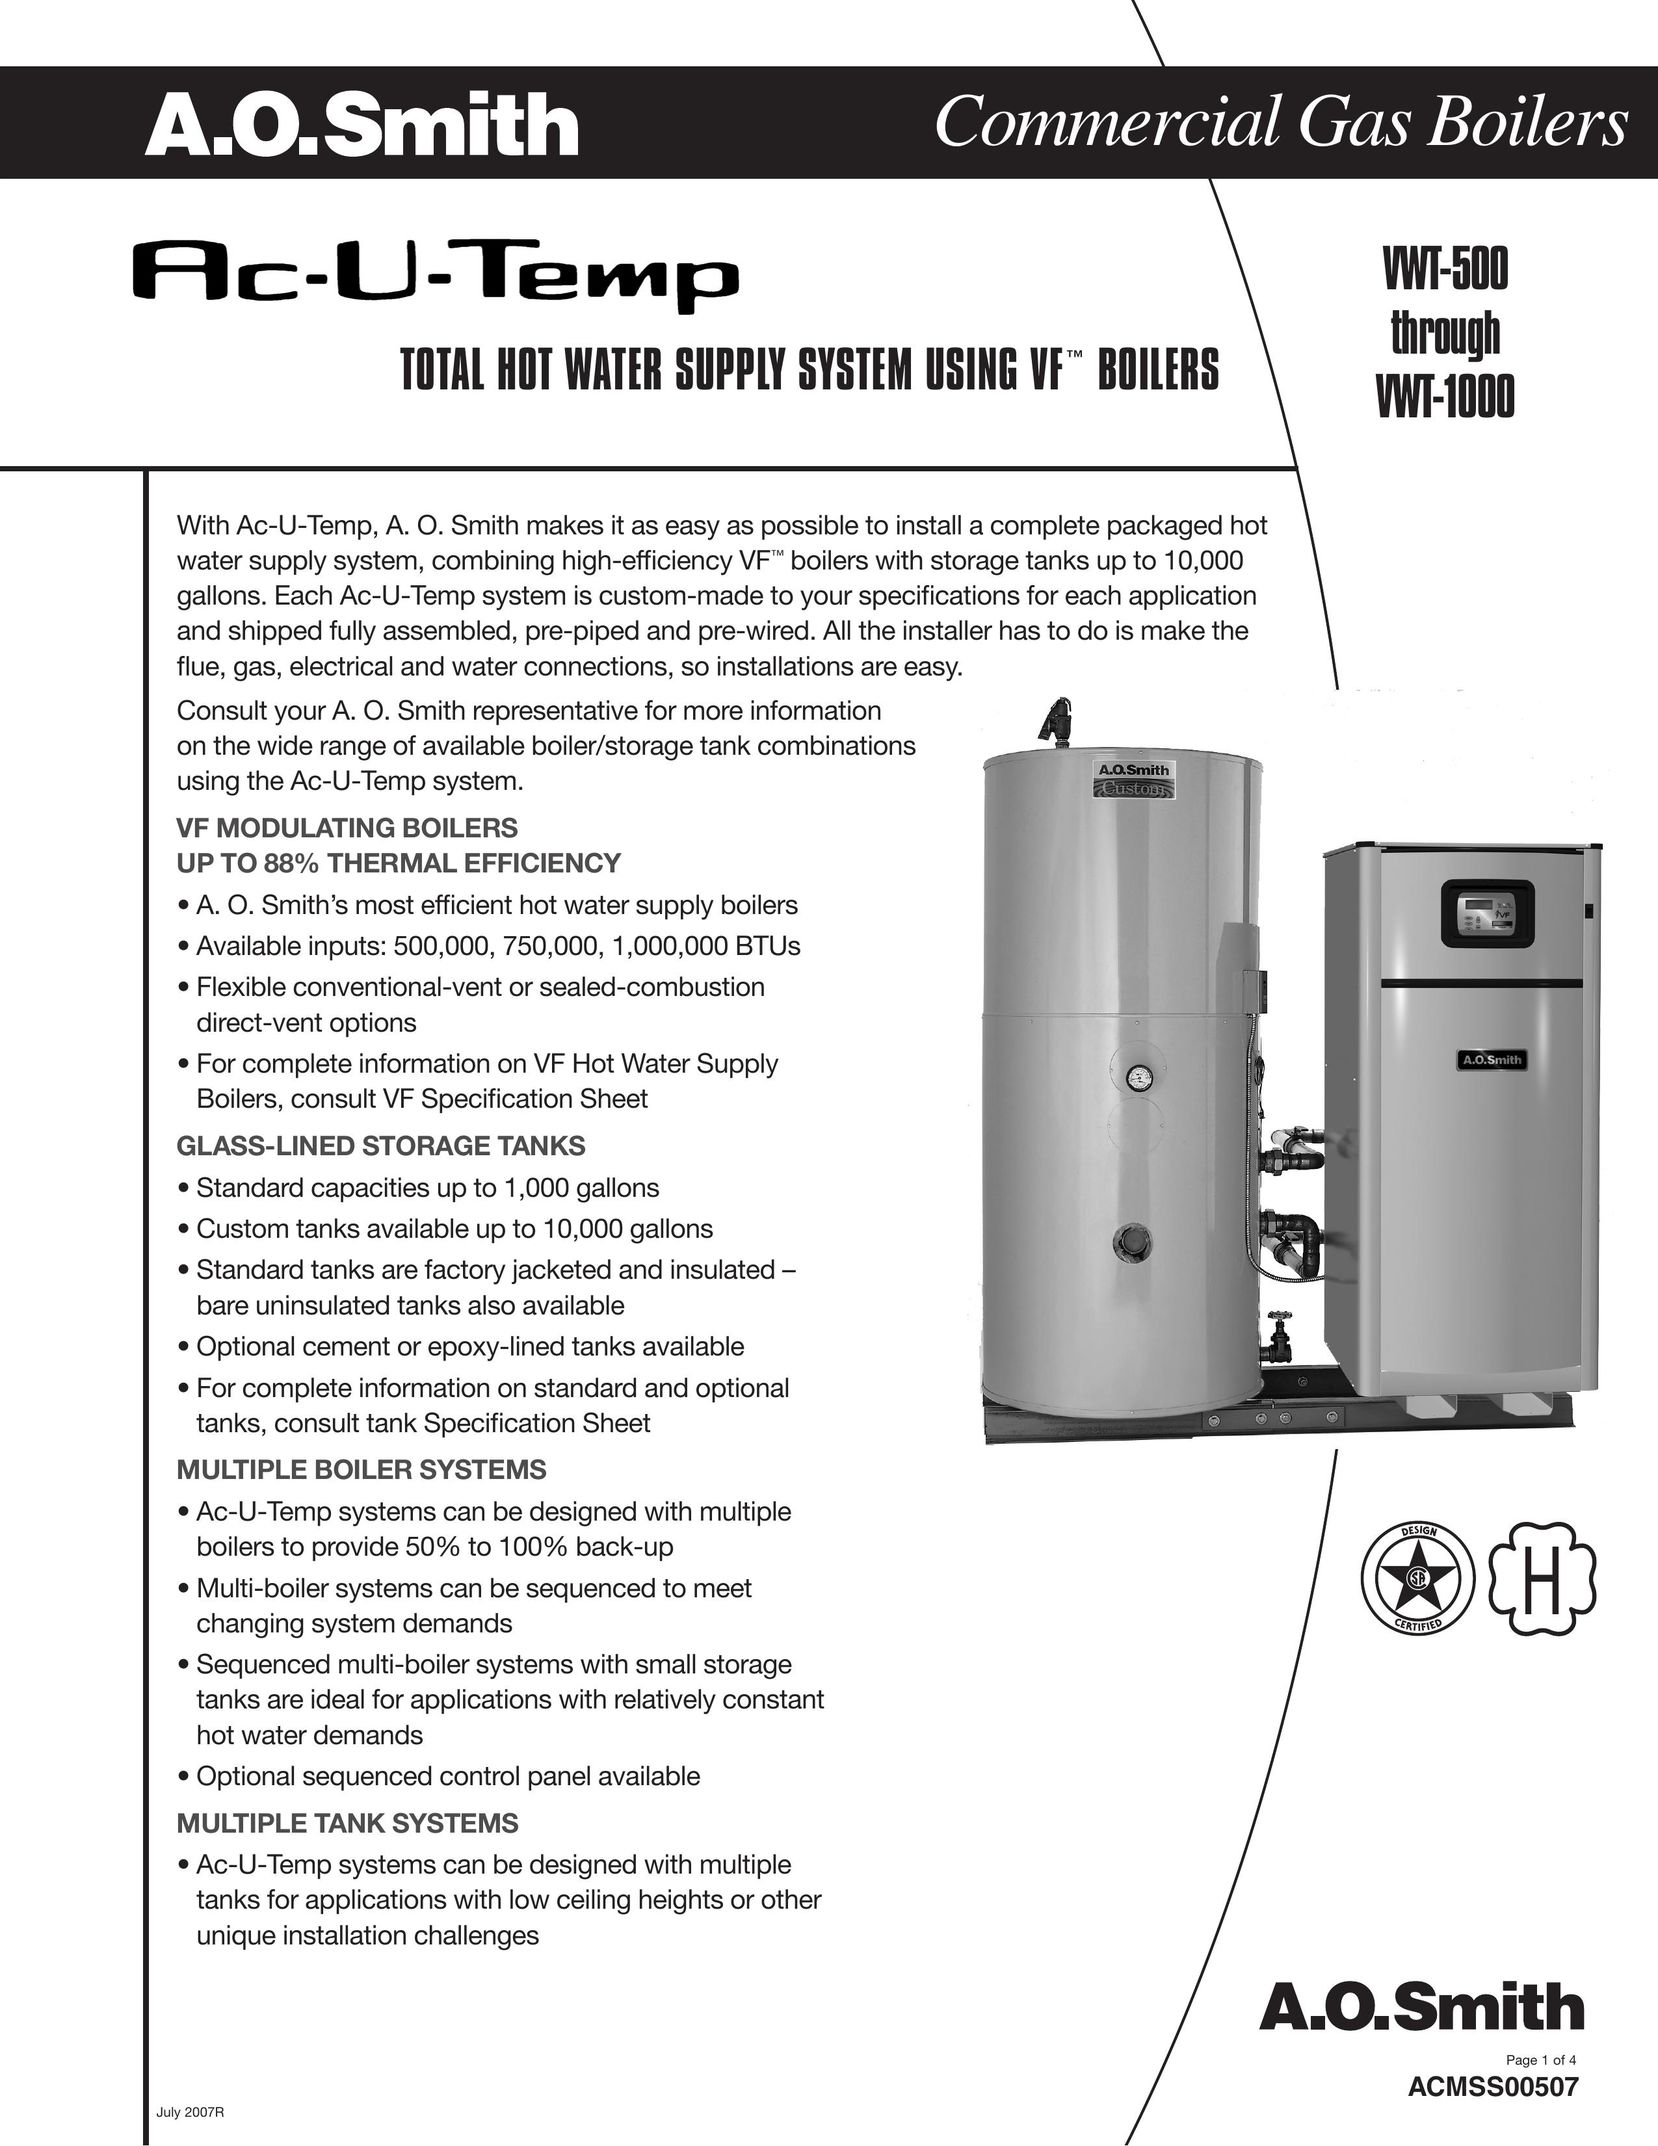 A.O. Smith VWT-500 Boiler User Manual (Page 1)